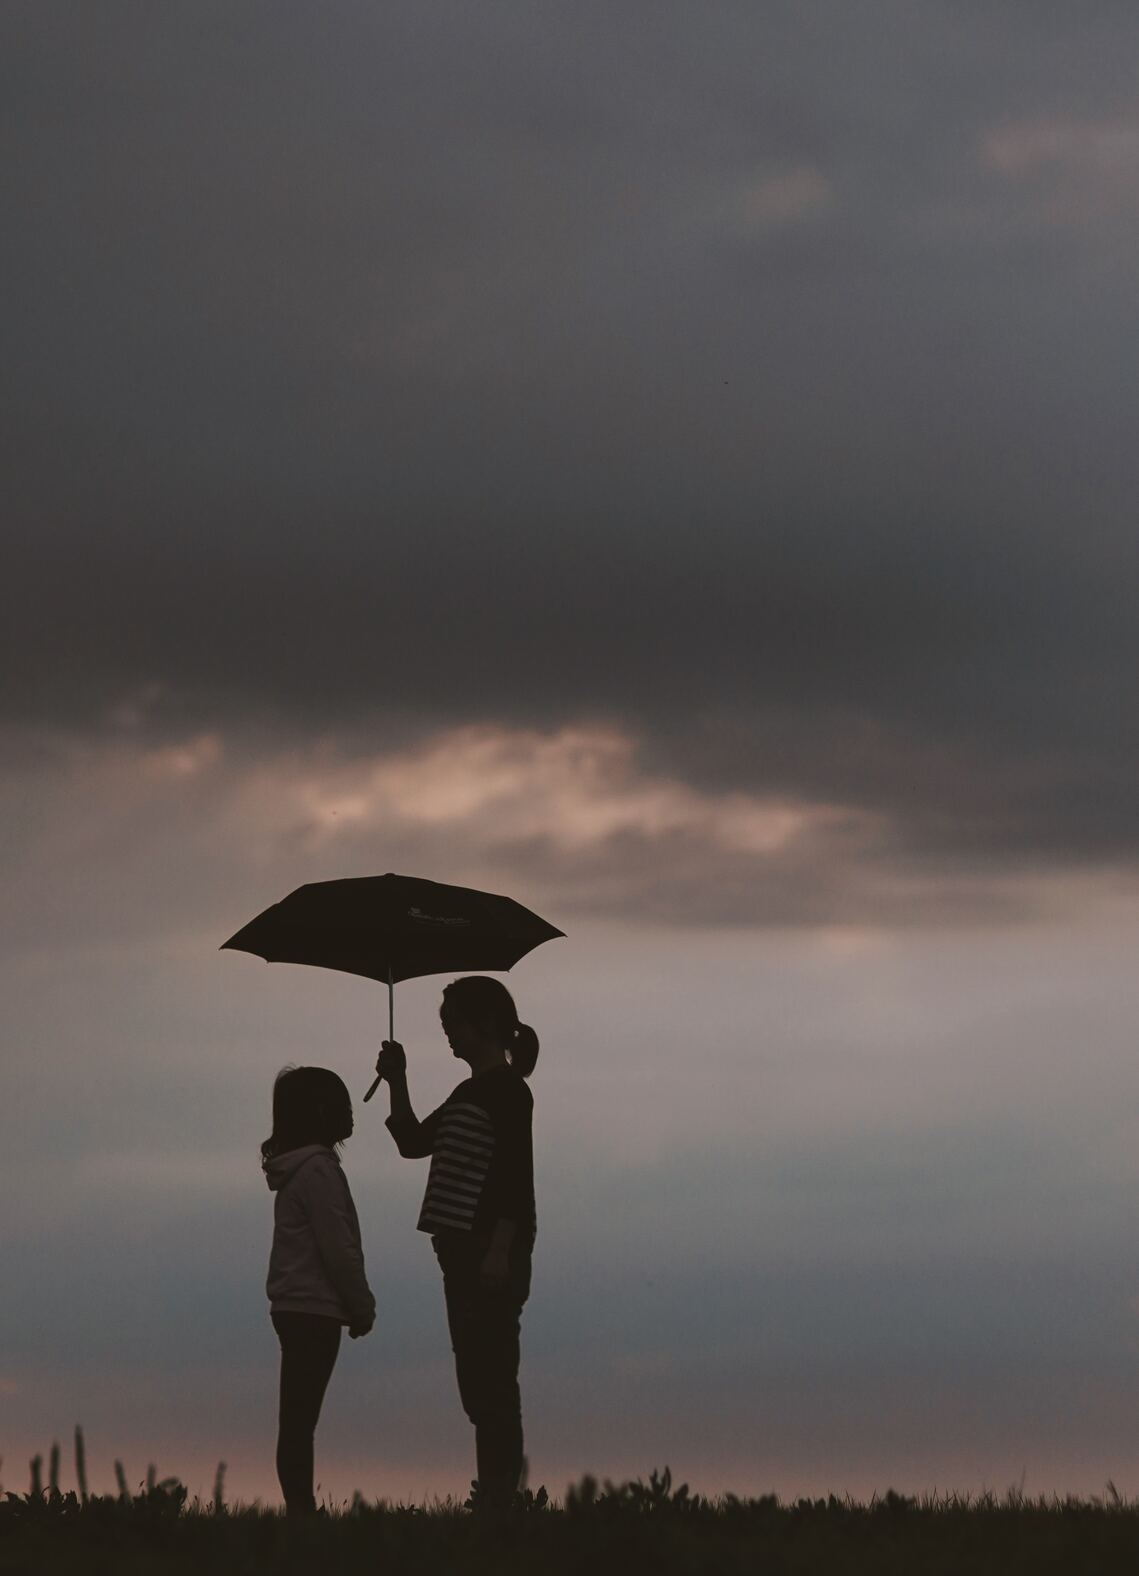 A woman holding an umbrella over a young girl